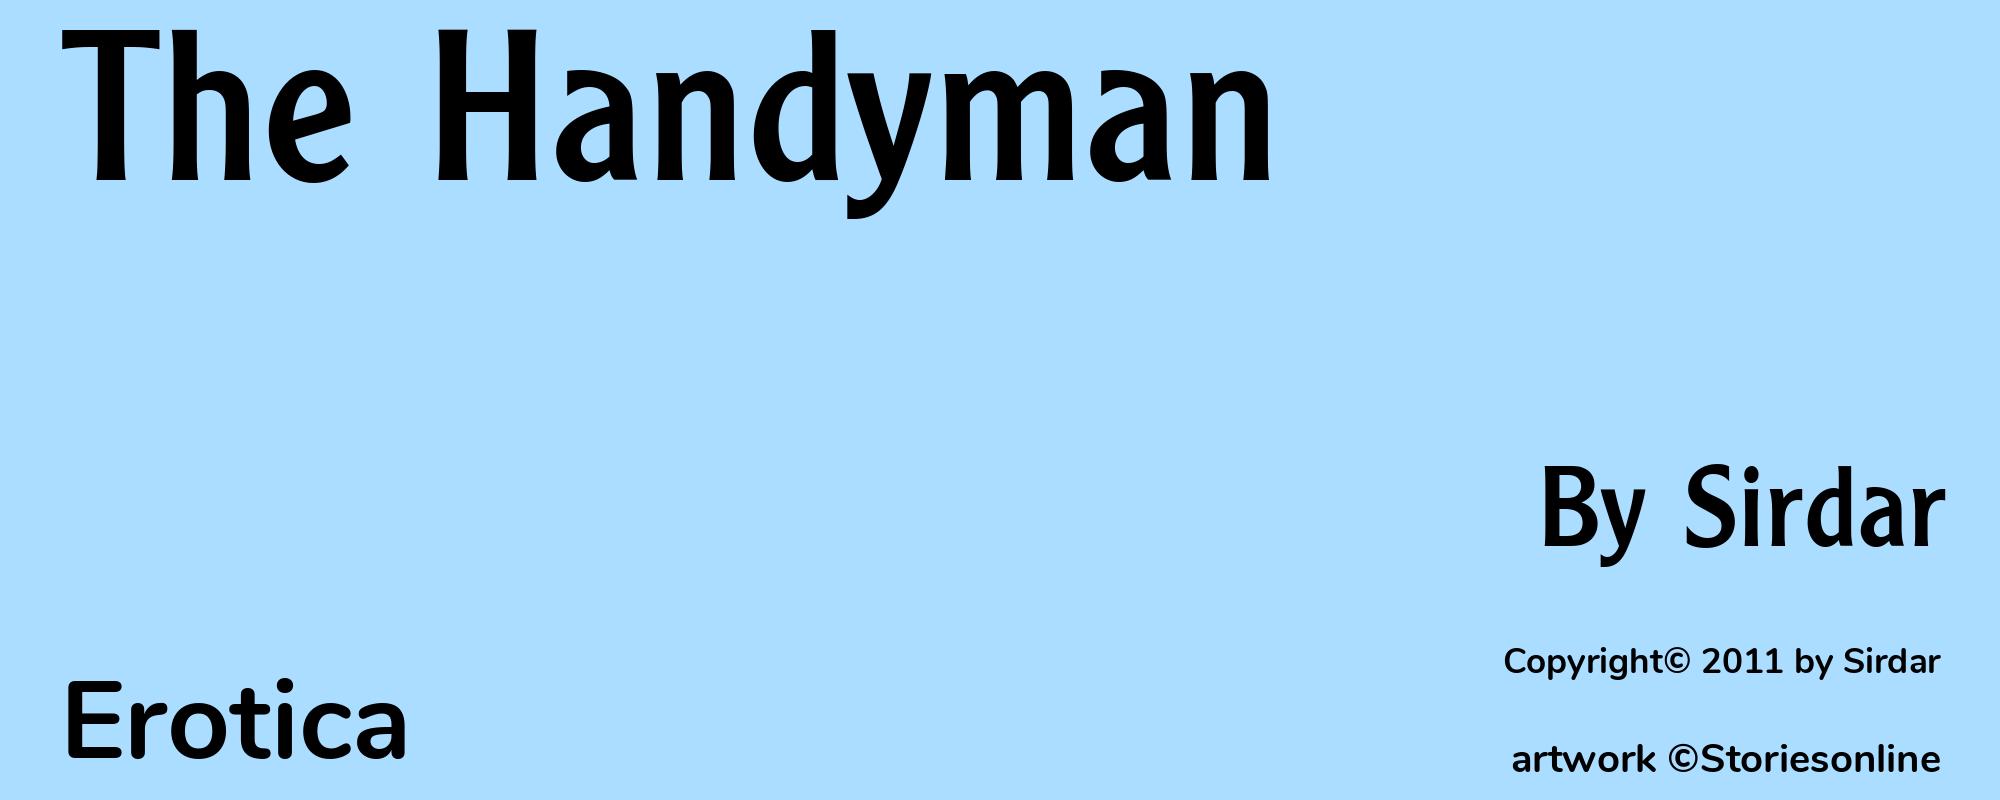 The Handyman - Cover